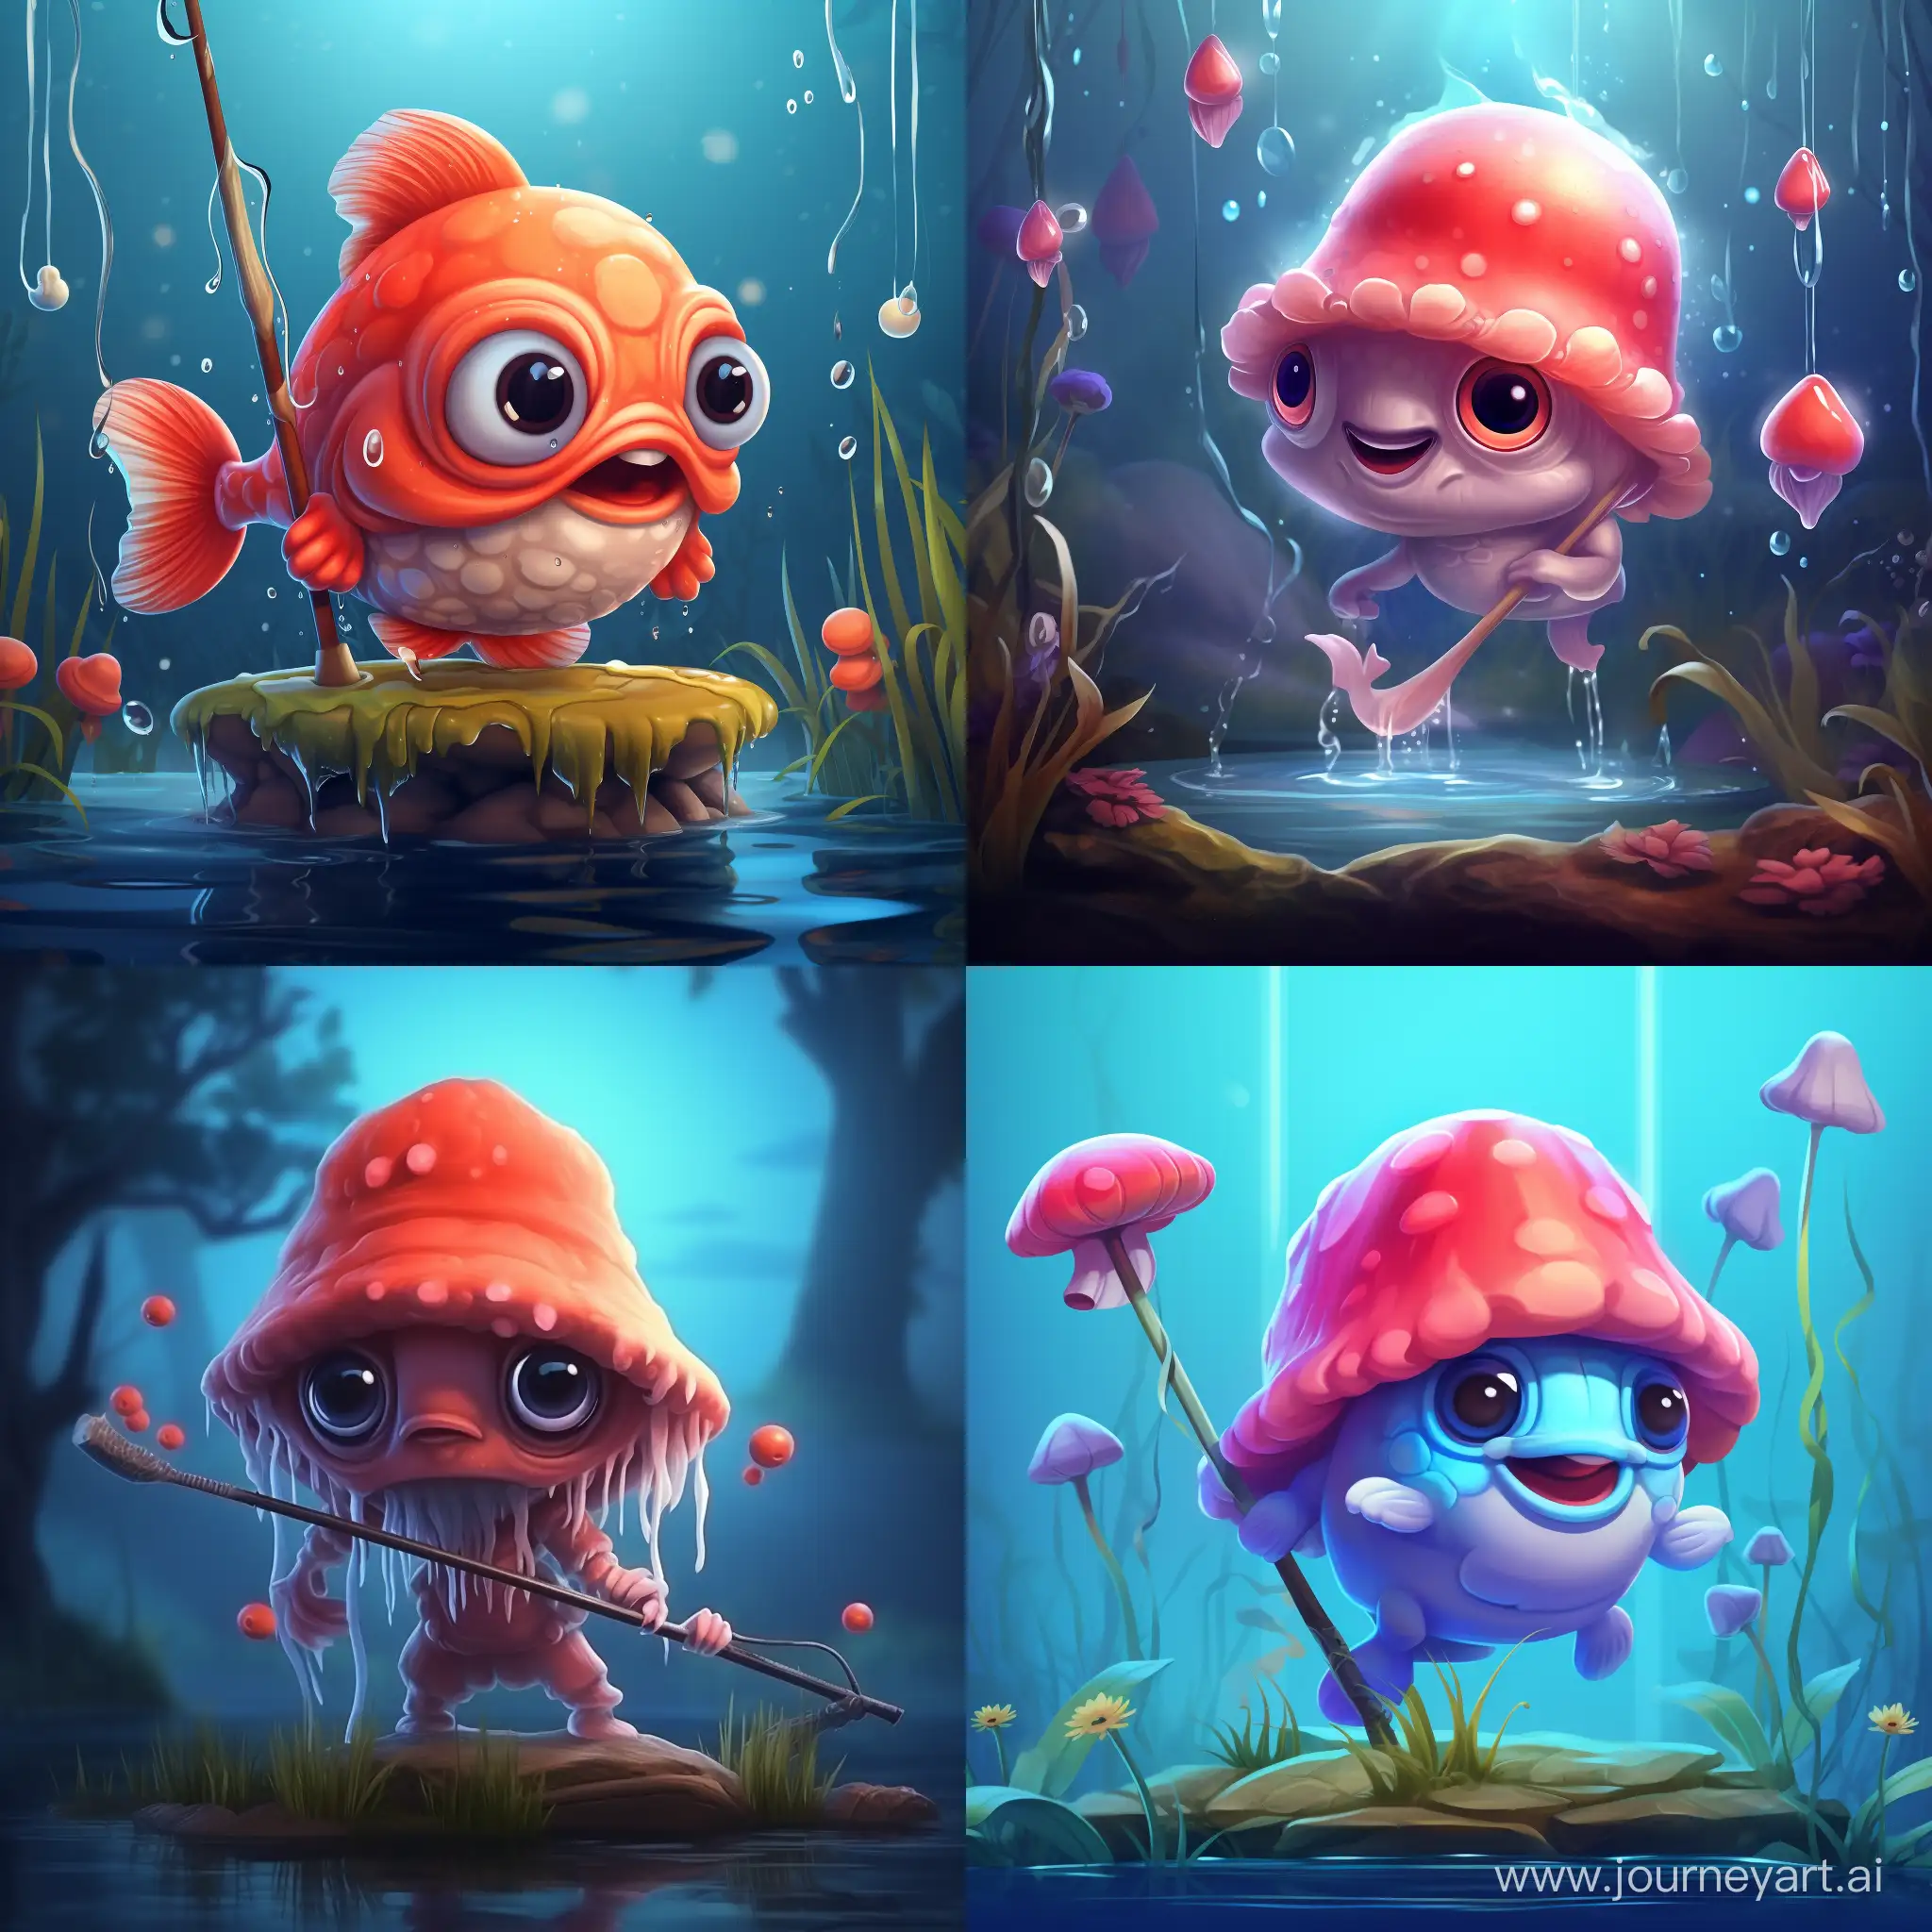 Adorable-Mushroom-Fishing-with-Eyes-Whimsical-2D-Illustration